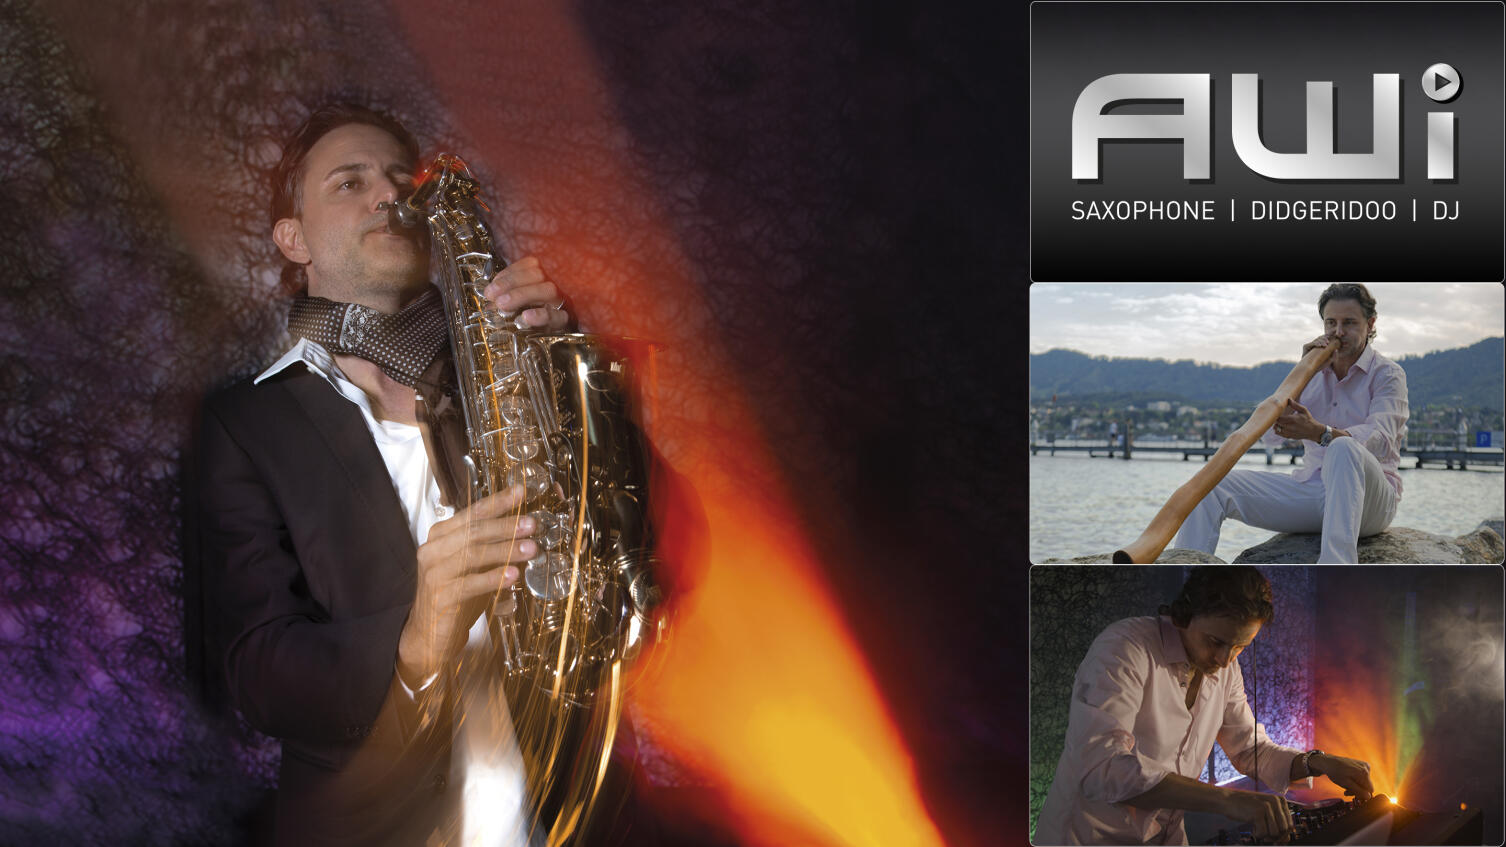 AWI - Saxophon | Didgeridoo | DJ